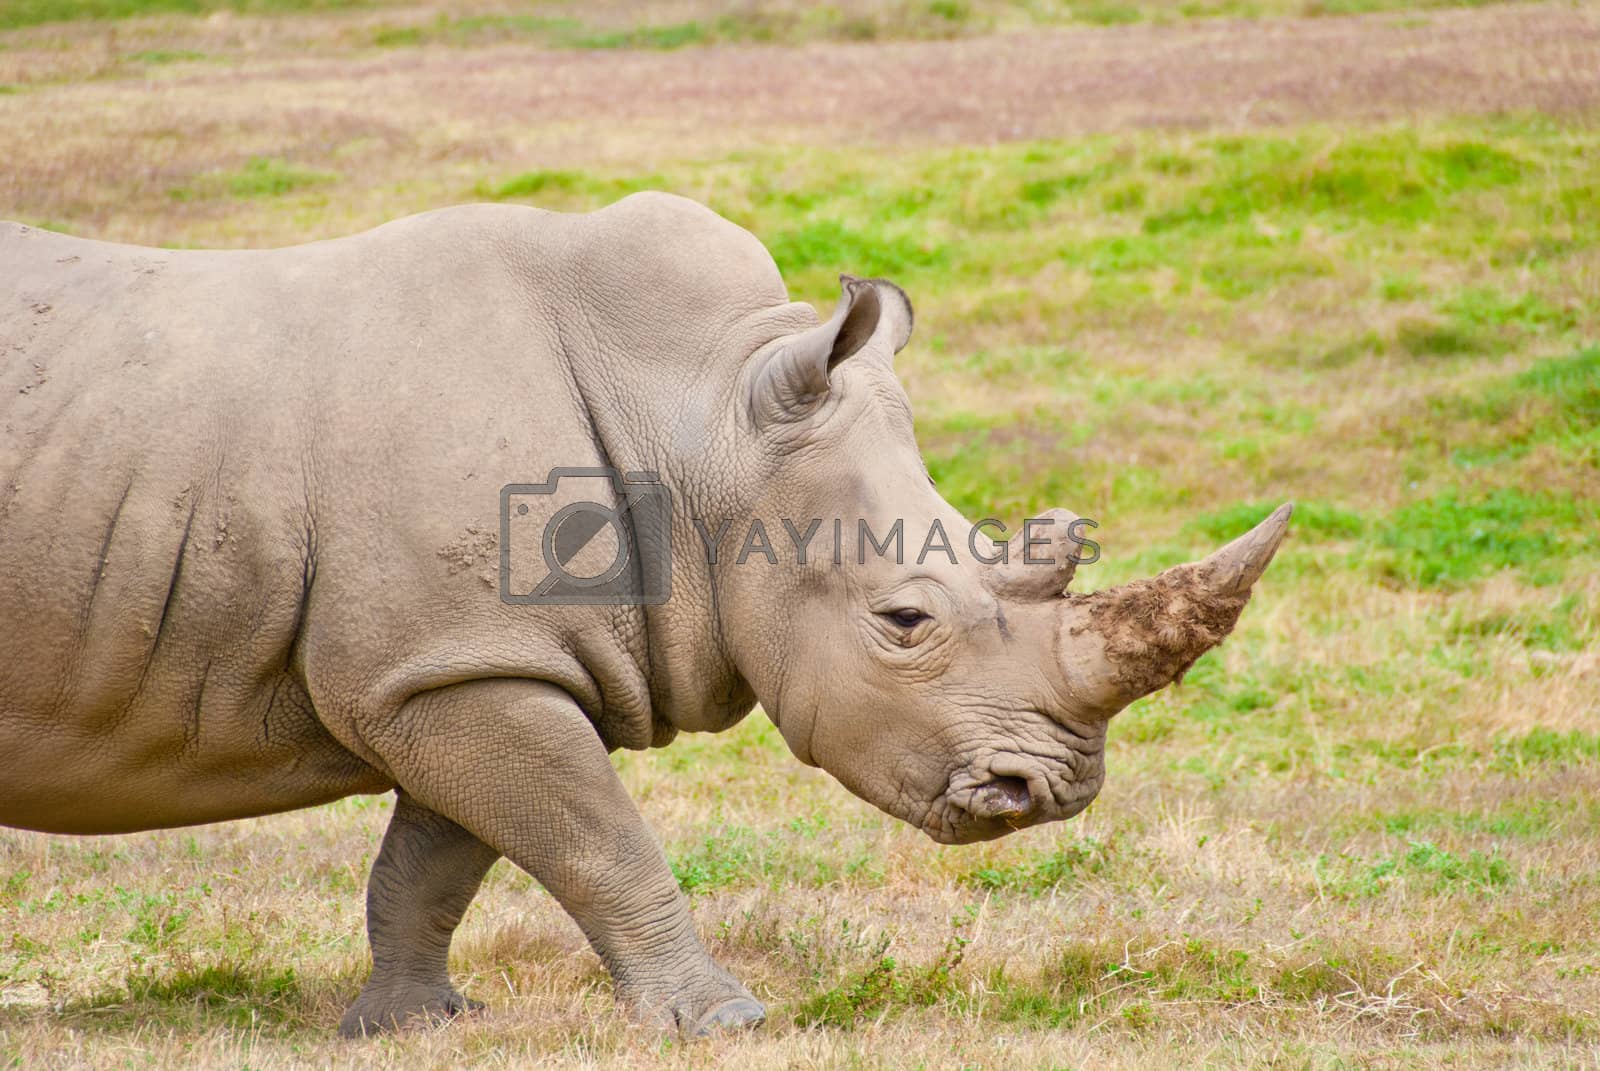 Royalty free image of Adult Rhino Walking On Dry Grassland by KonArt